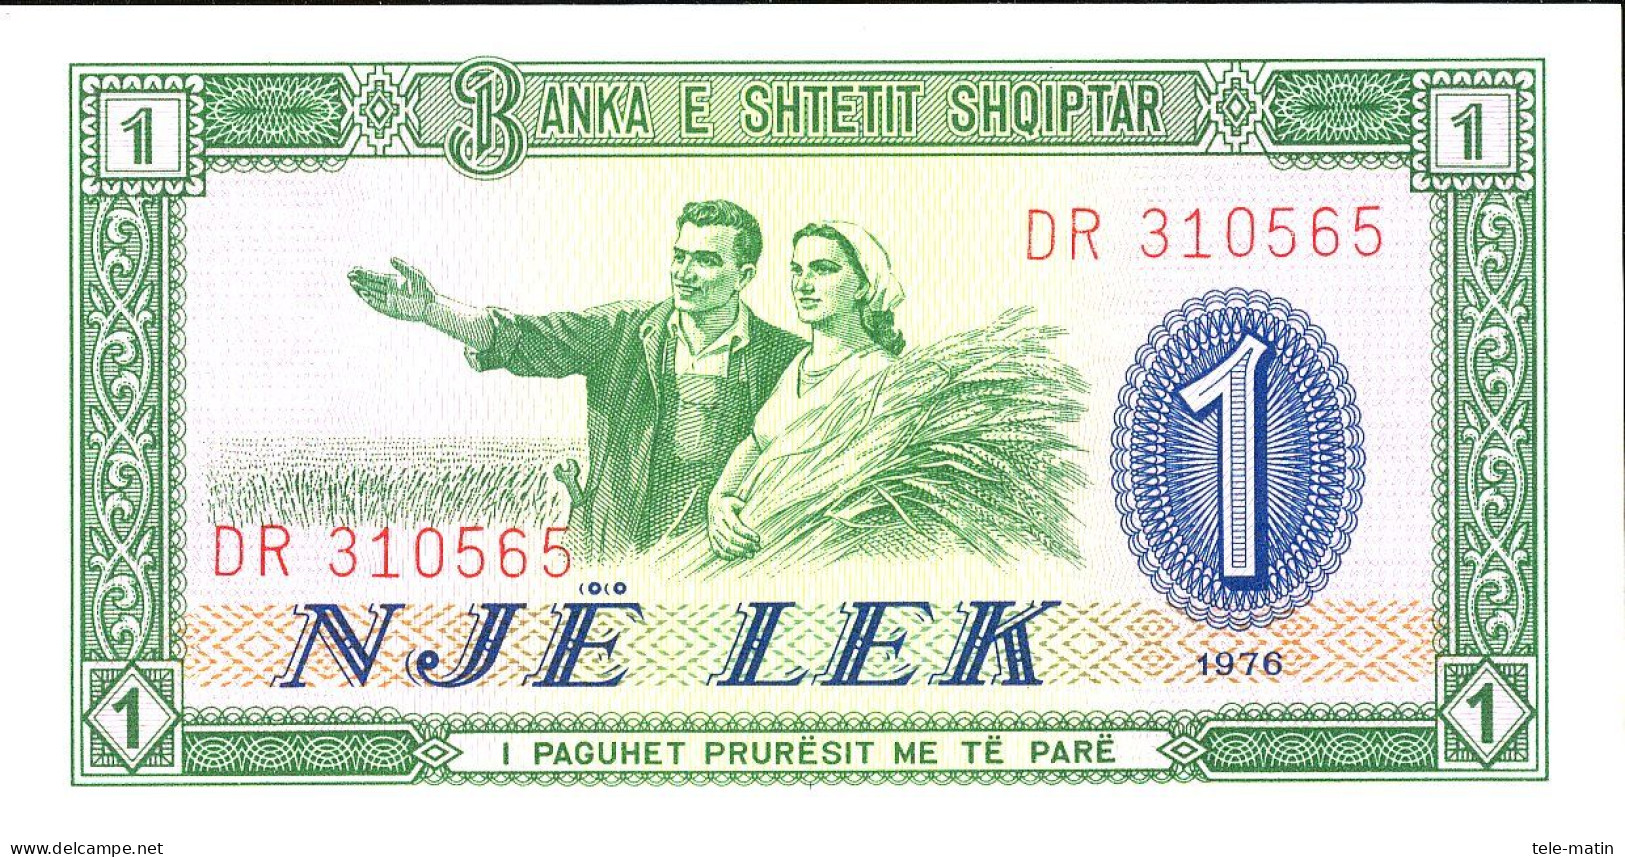 6 Billets De L'Albanie De 1957 A 1976 - Albanie